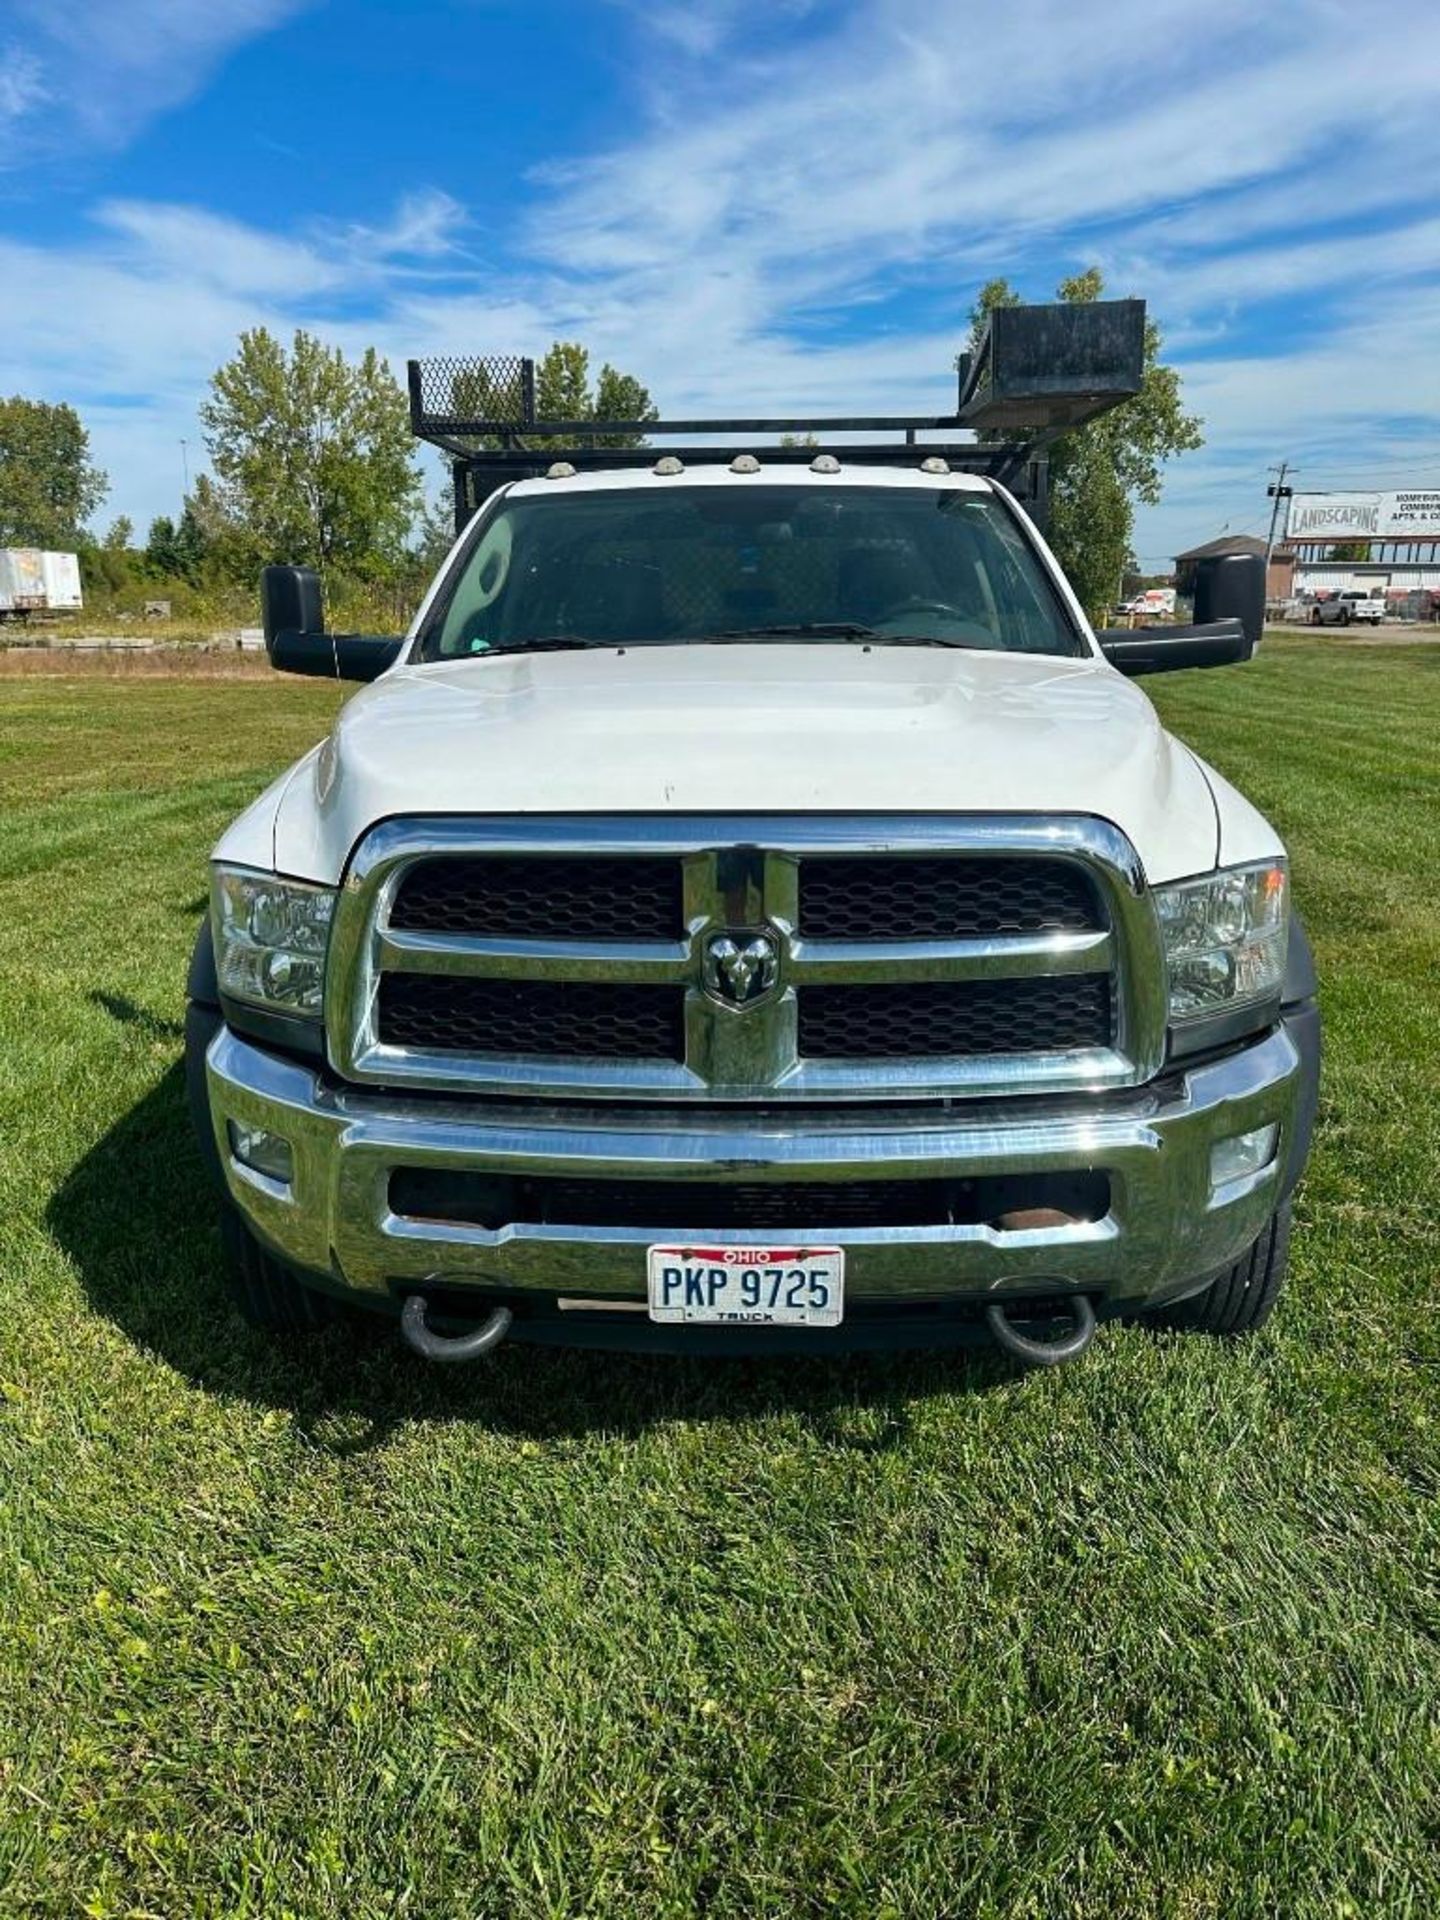 2017 Dodge Ram 5500 heavy duty truck, 6.7L Cummins Turbo diesel, dually, miles: 231,628 on truck, - Image 8 of 37